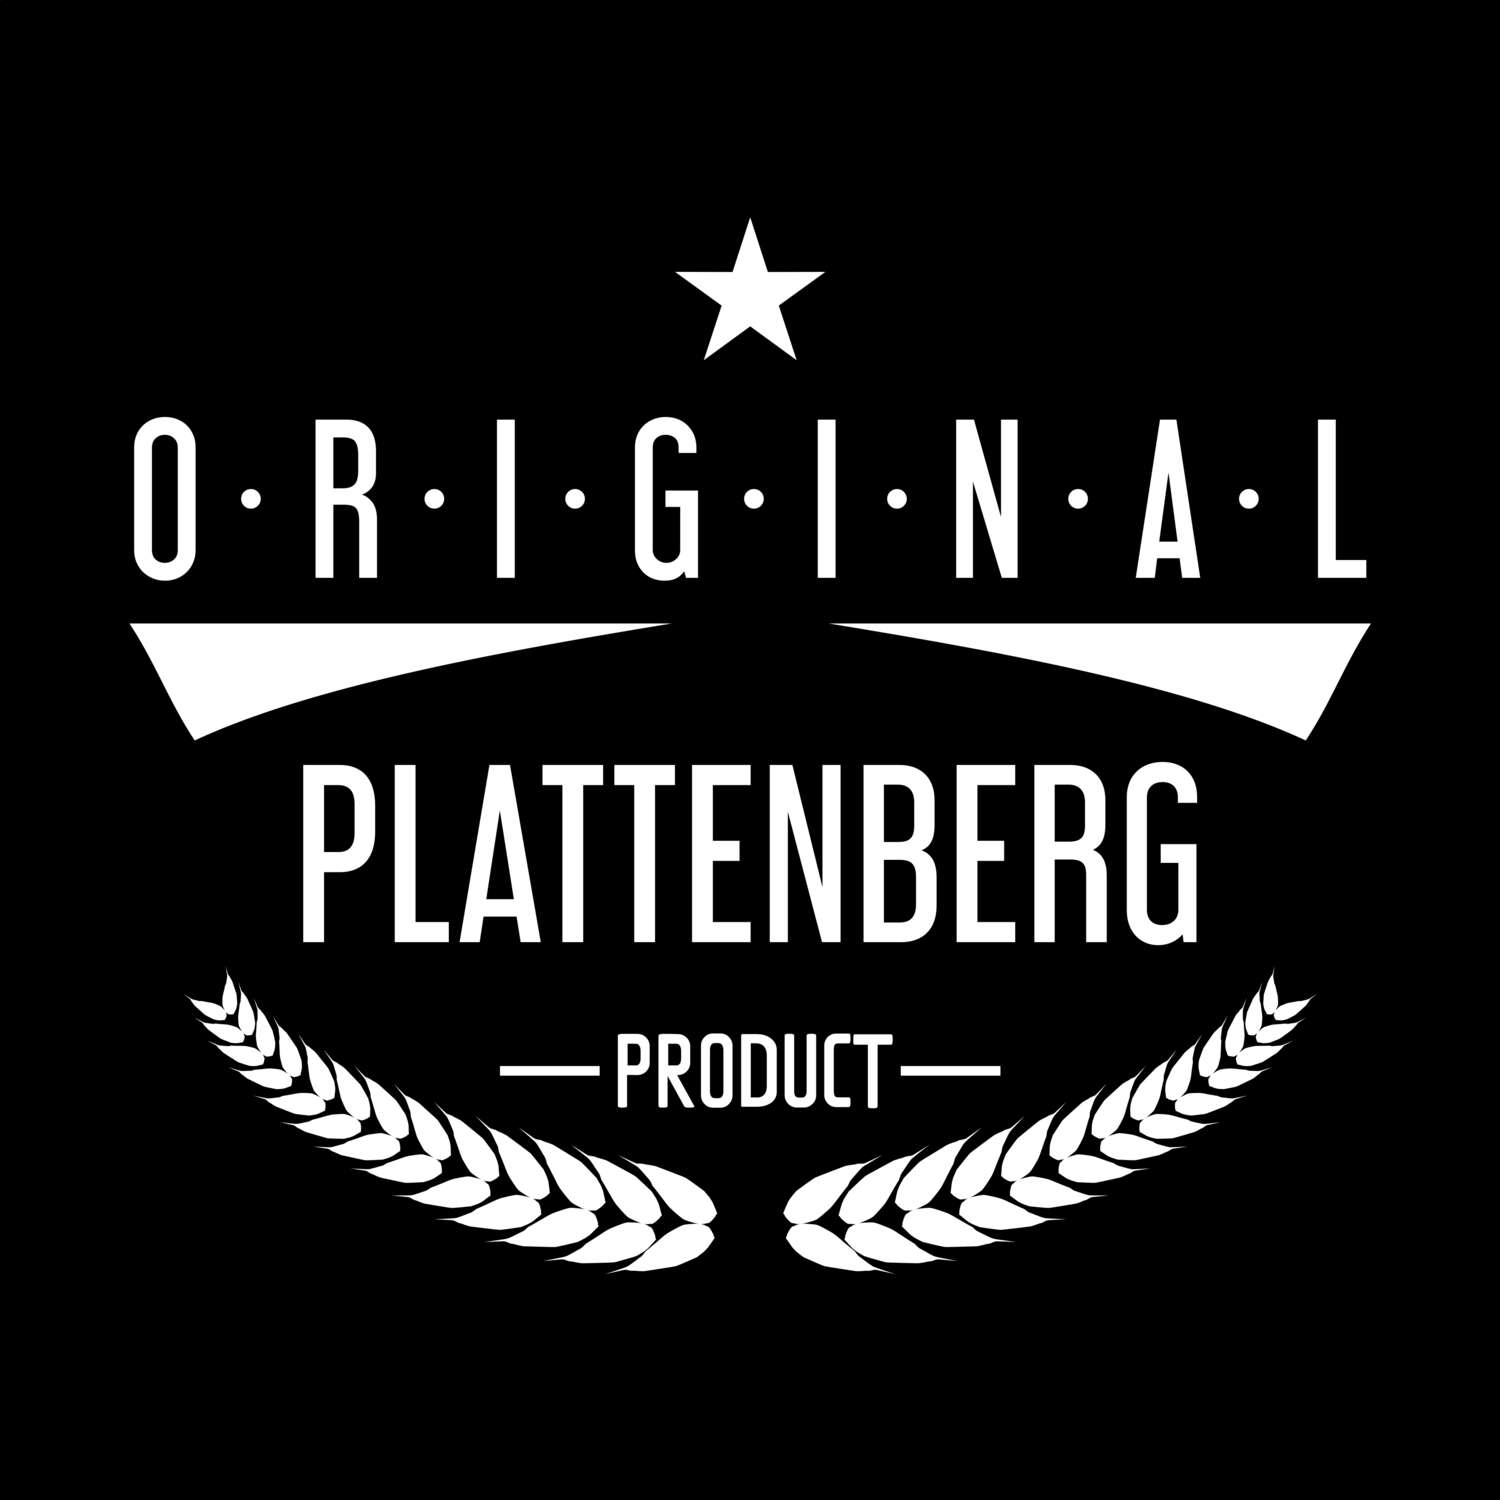 Plattenberg T-Shirt »Original Product«